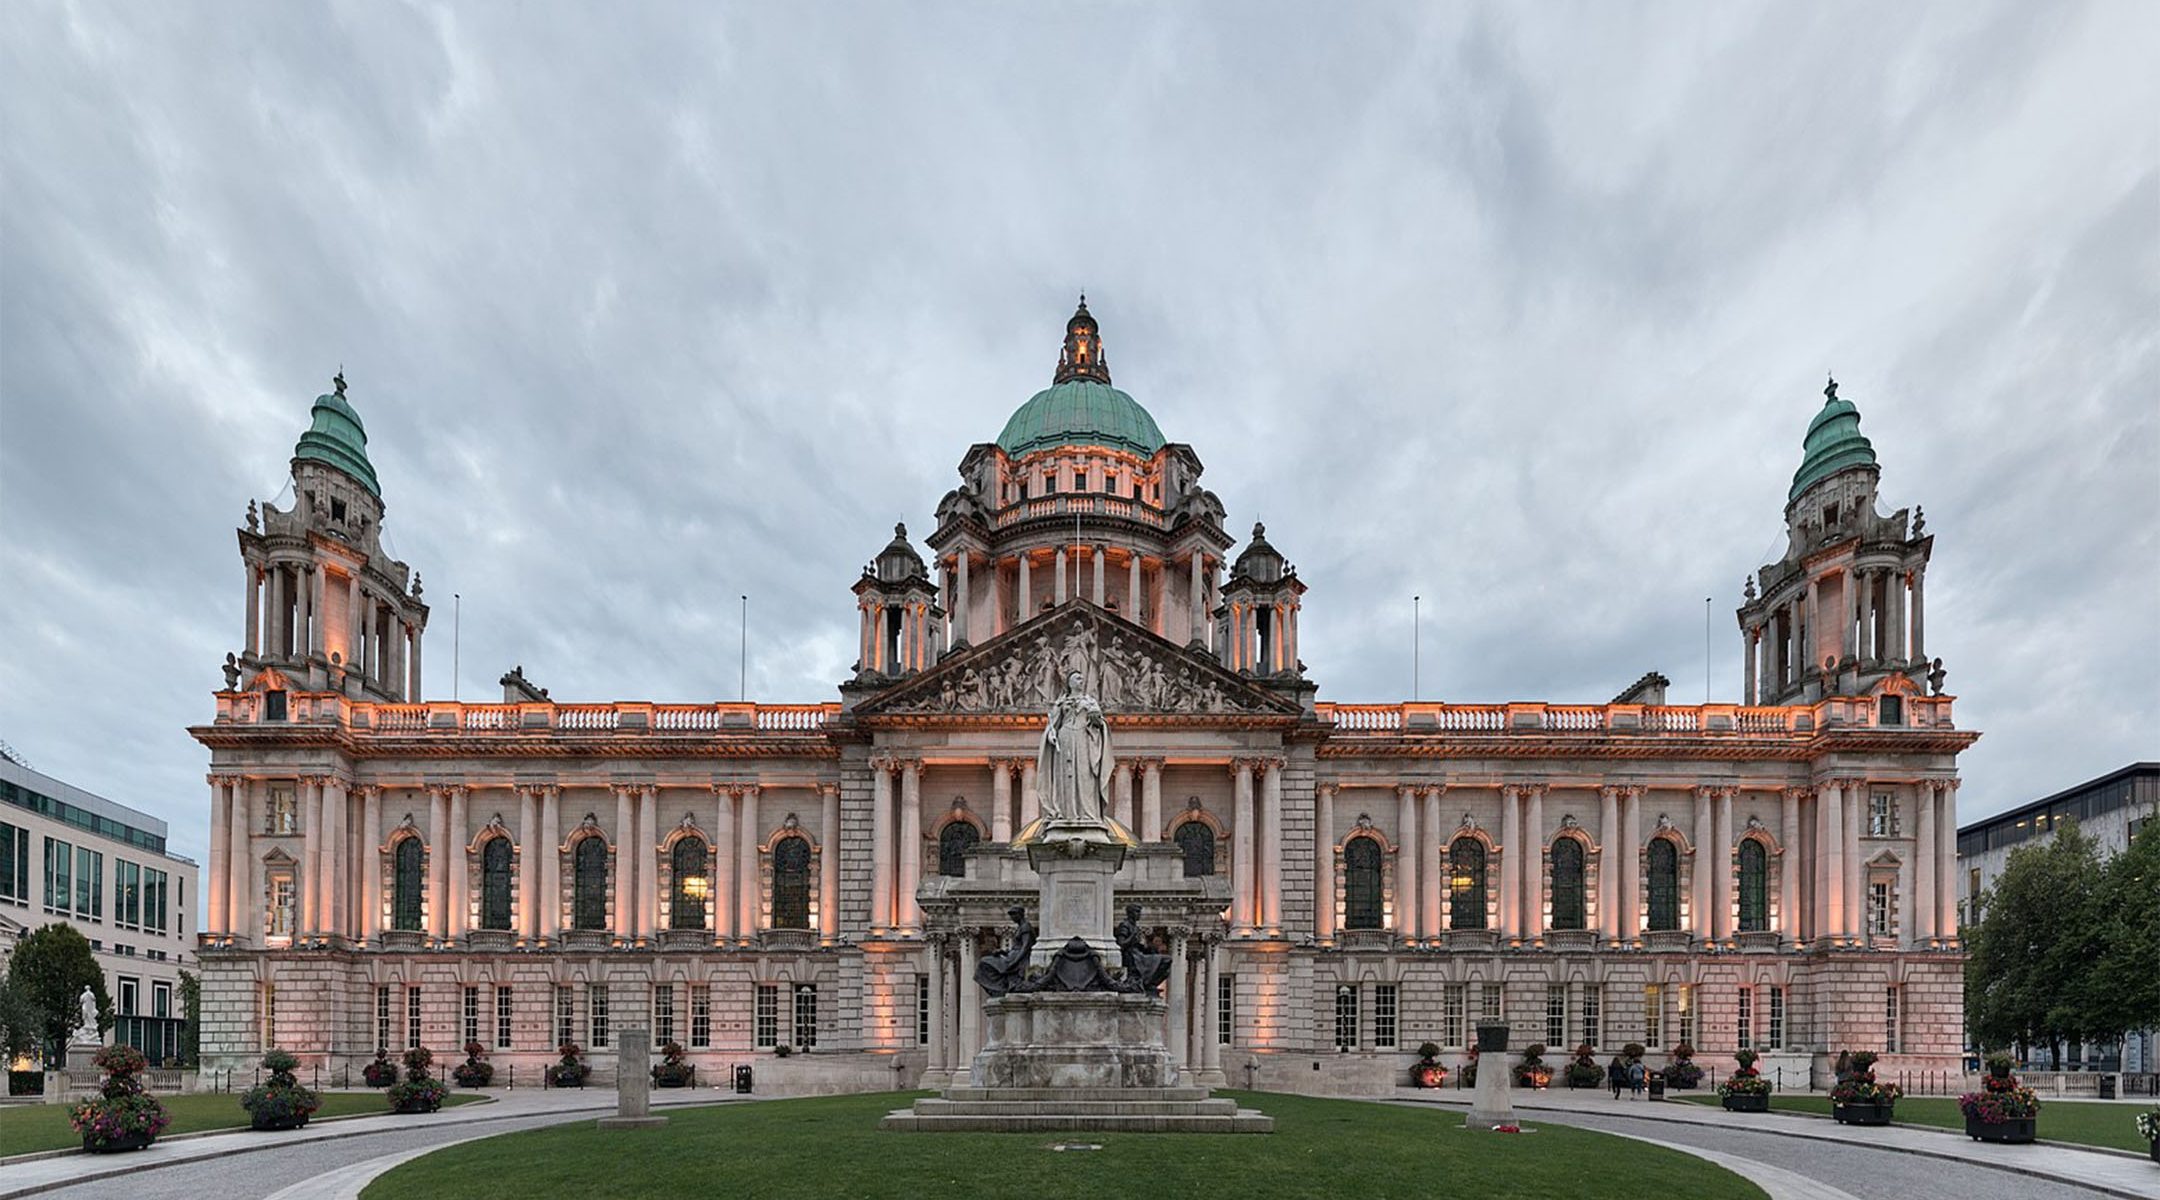 The city hall of Belfast, UK. (Giorgio Galeotti/Wikimedia Commons)